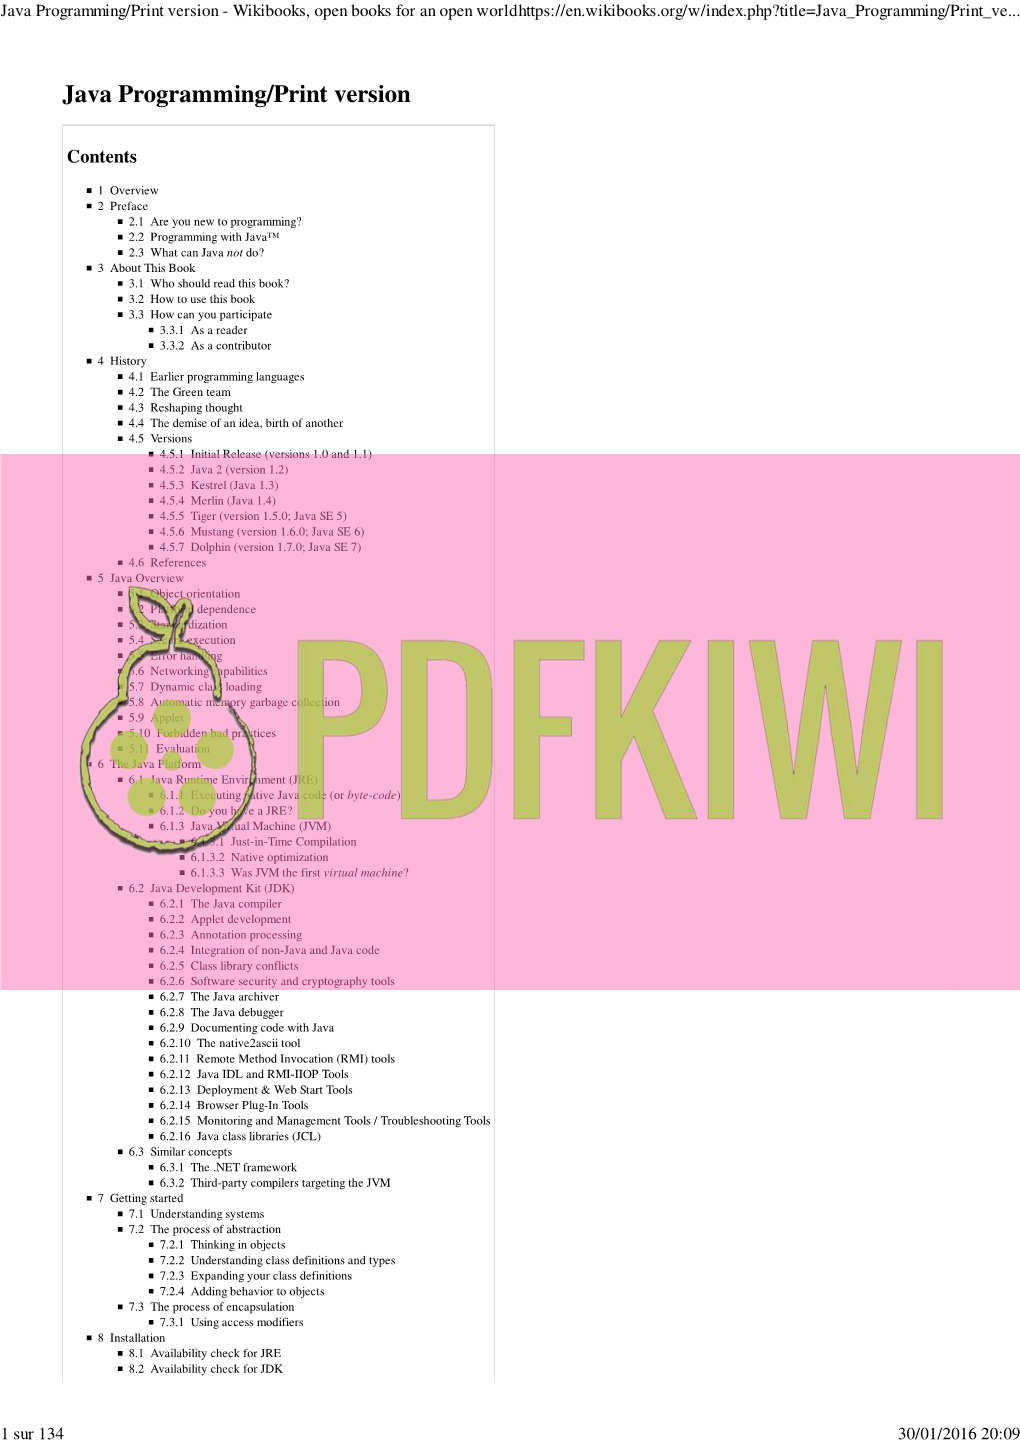 Java Programming/Print Version - Wikibooks, Open Books for an Open World